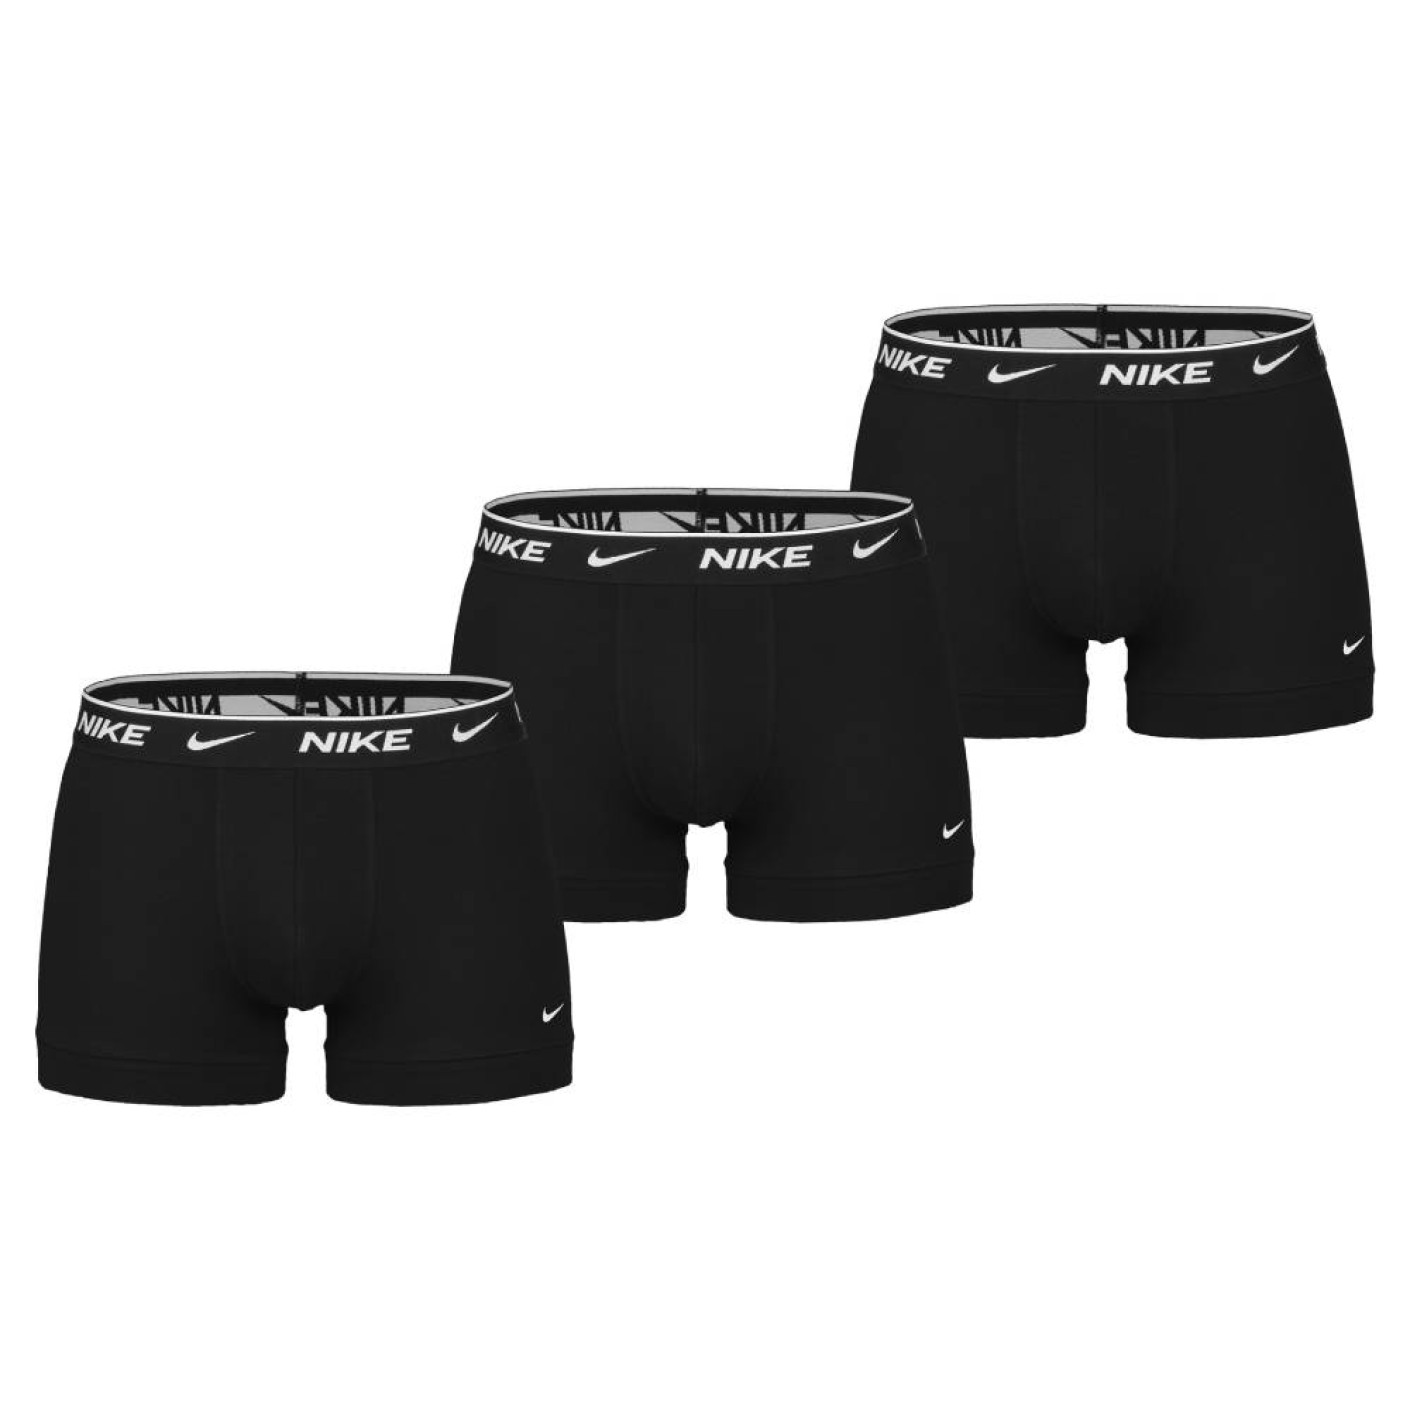 Nike Boxer Trunk Shorts Everyday Cotton 3-Pack Black